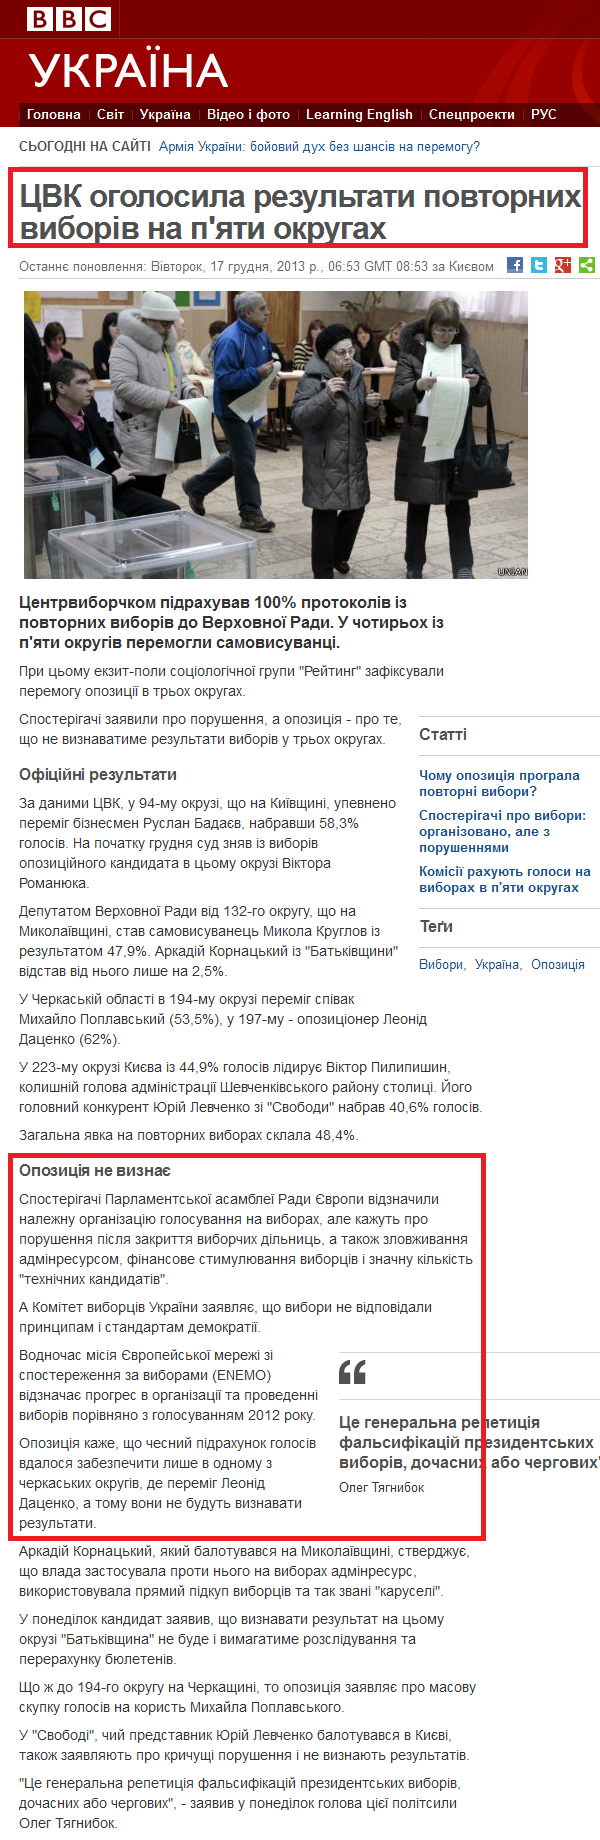 http://www.bbc.co.uk/ukrainian/politics/2013/12/131217_byelection_results_or.shtml